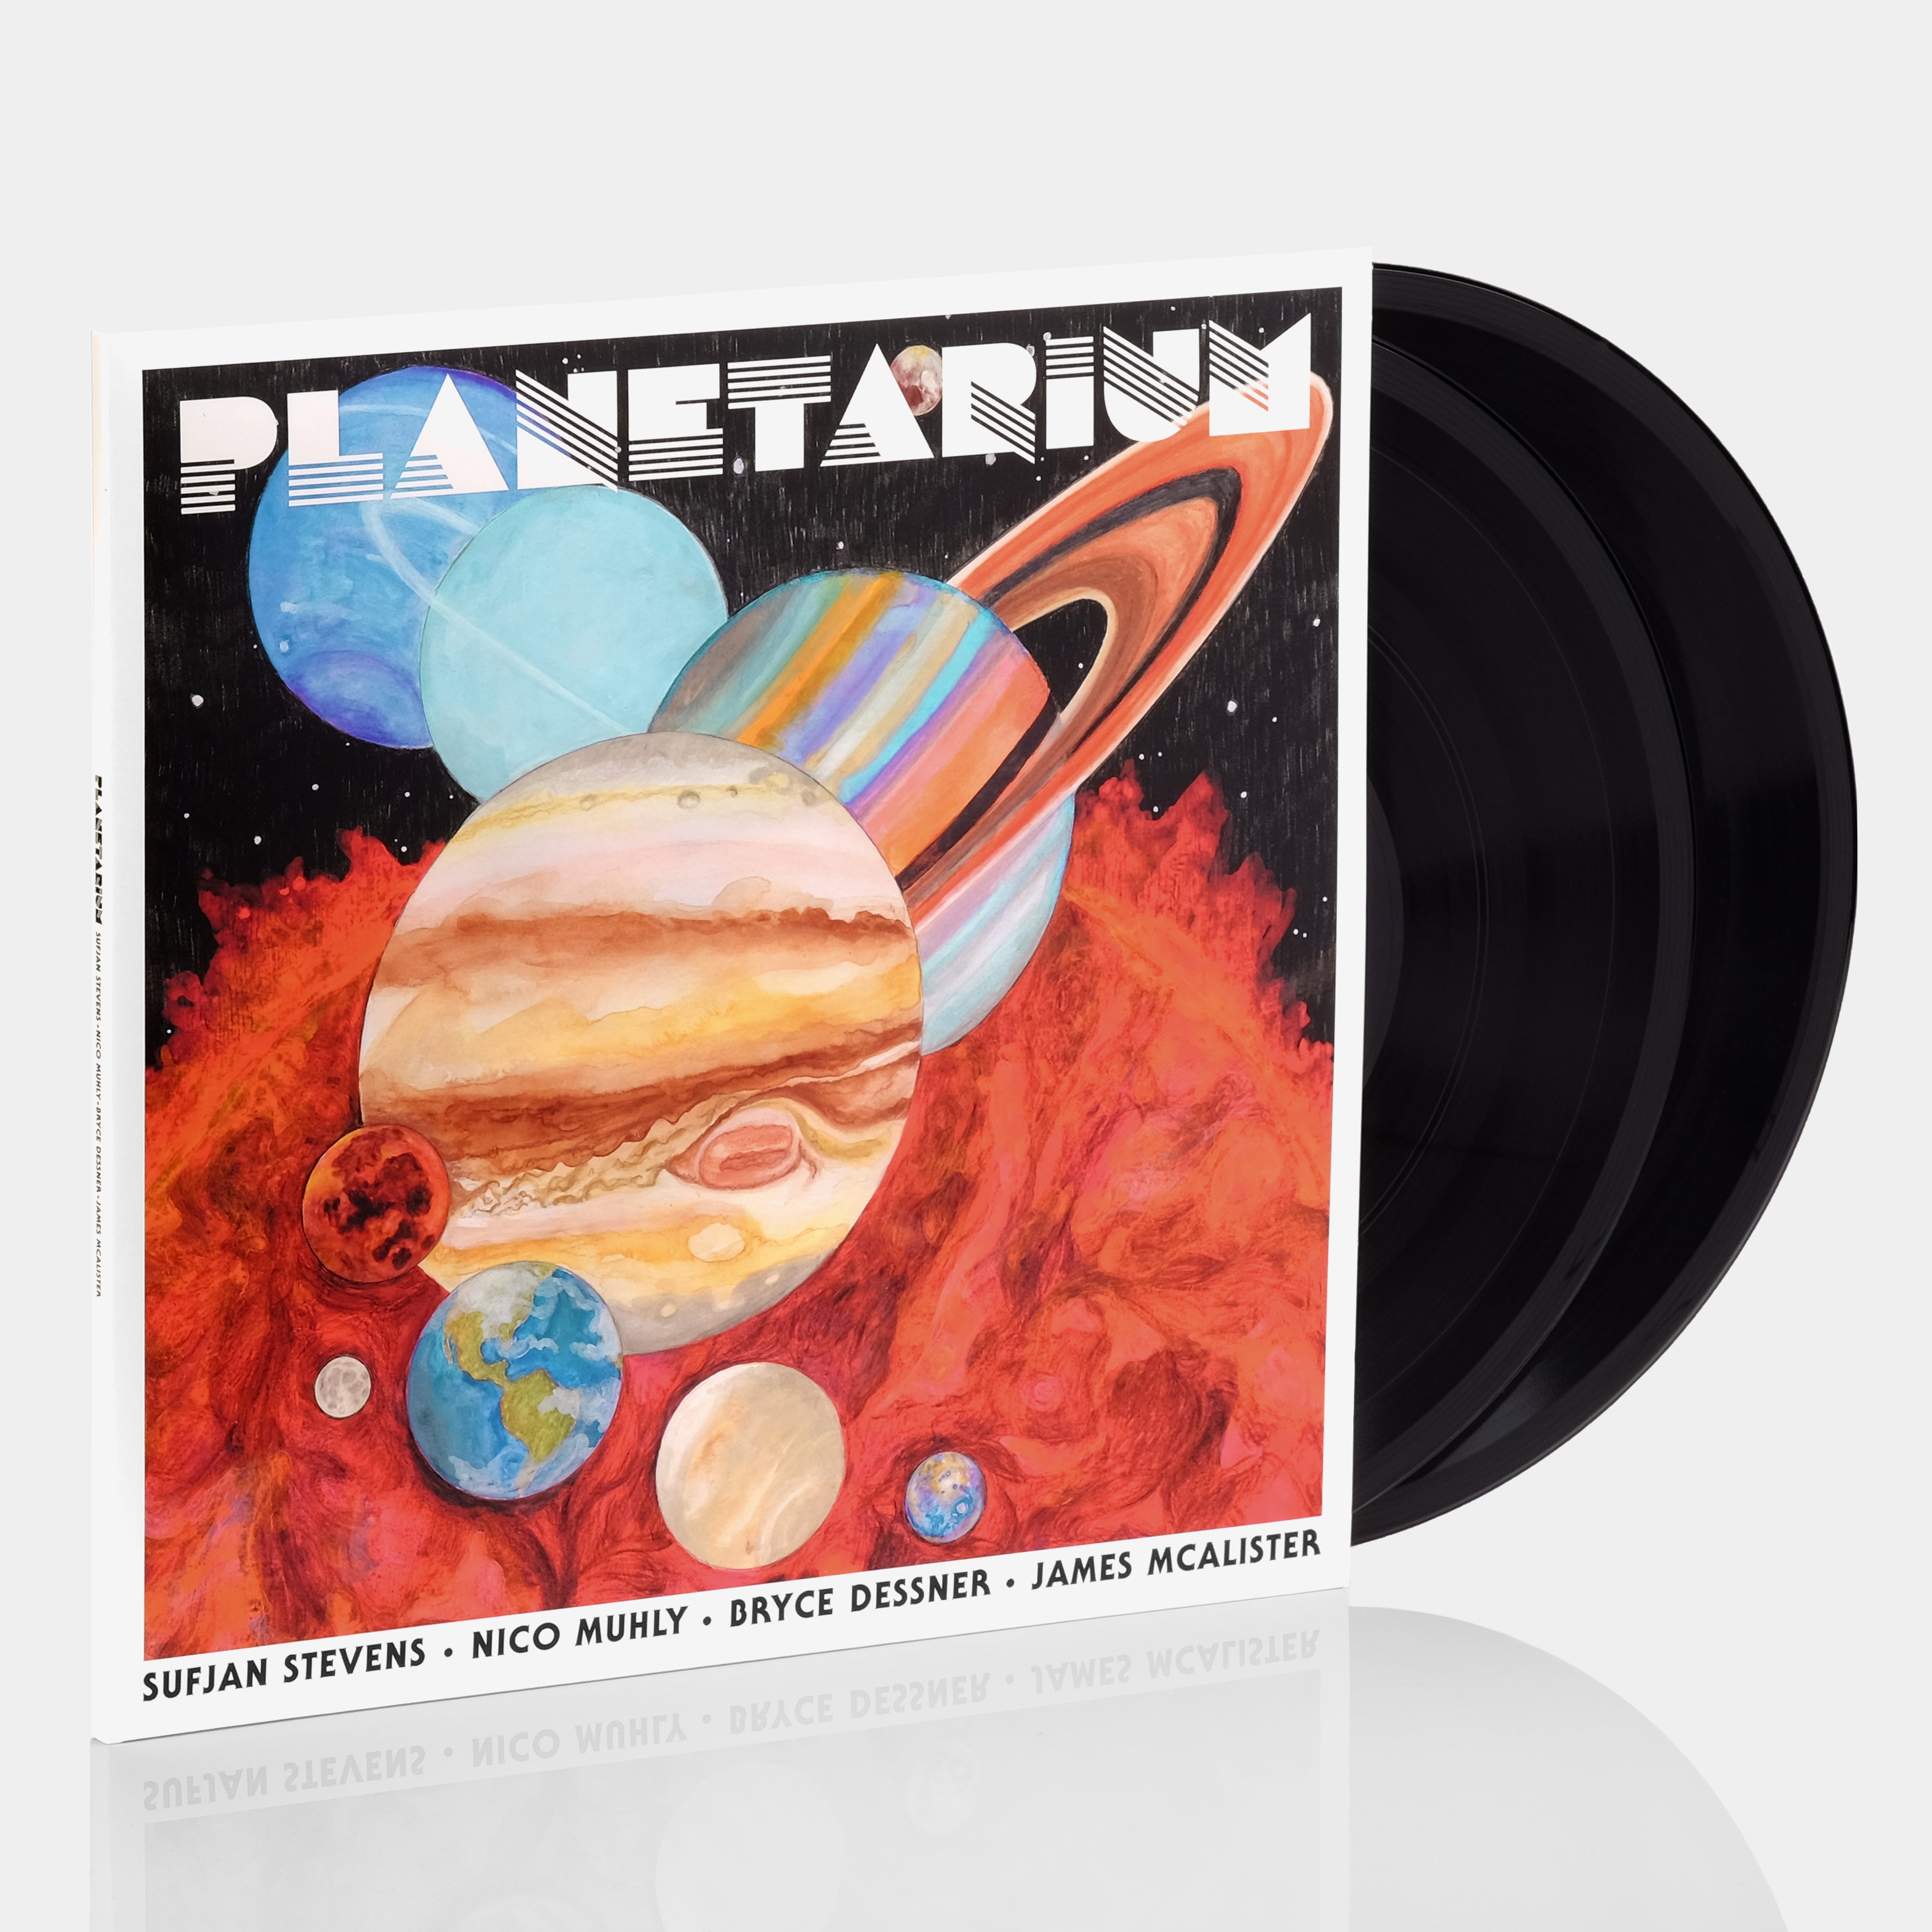 Sufjan Stevens, Nico Muhly, James McAlister & Bryce Dessner - Planetarium 2xLP Vinyl Record